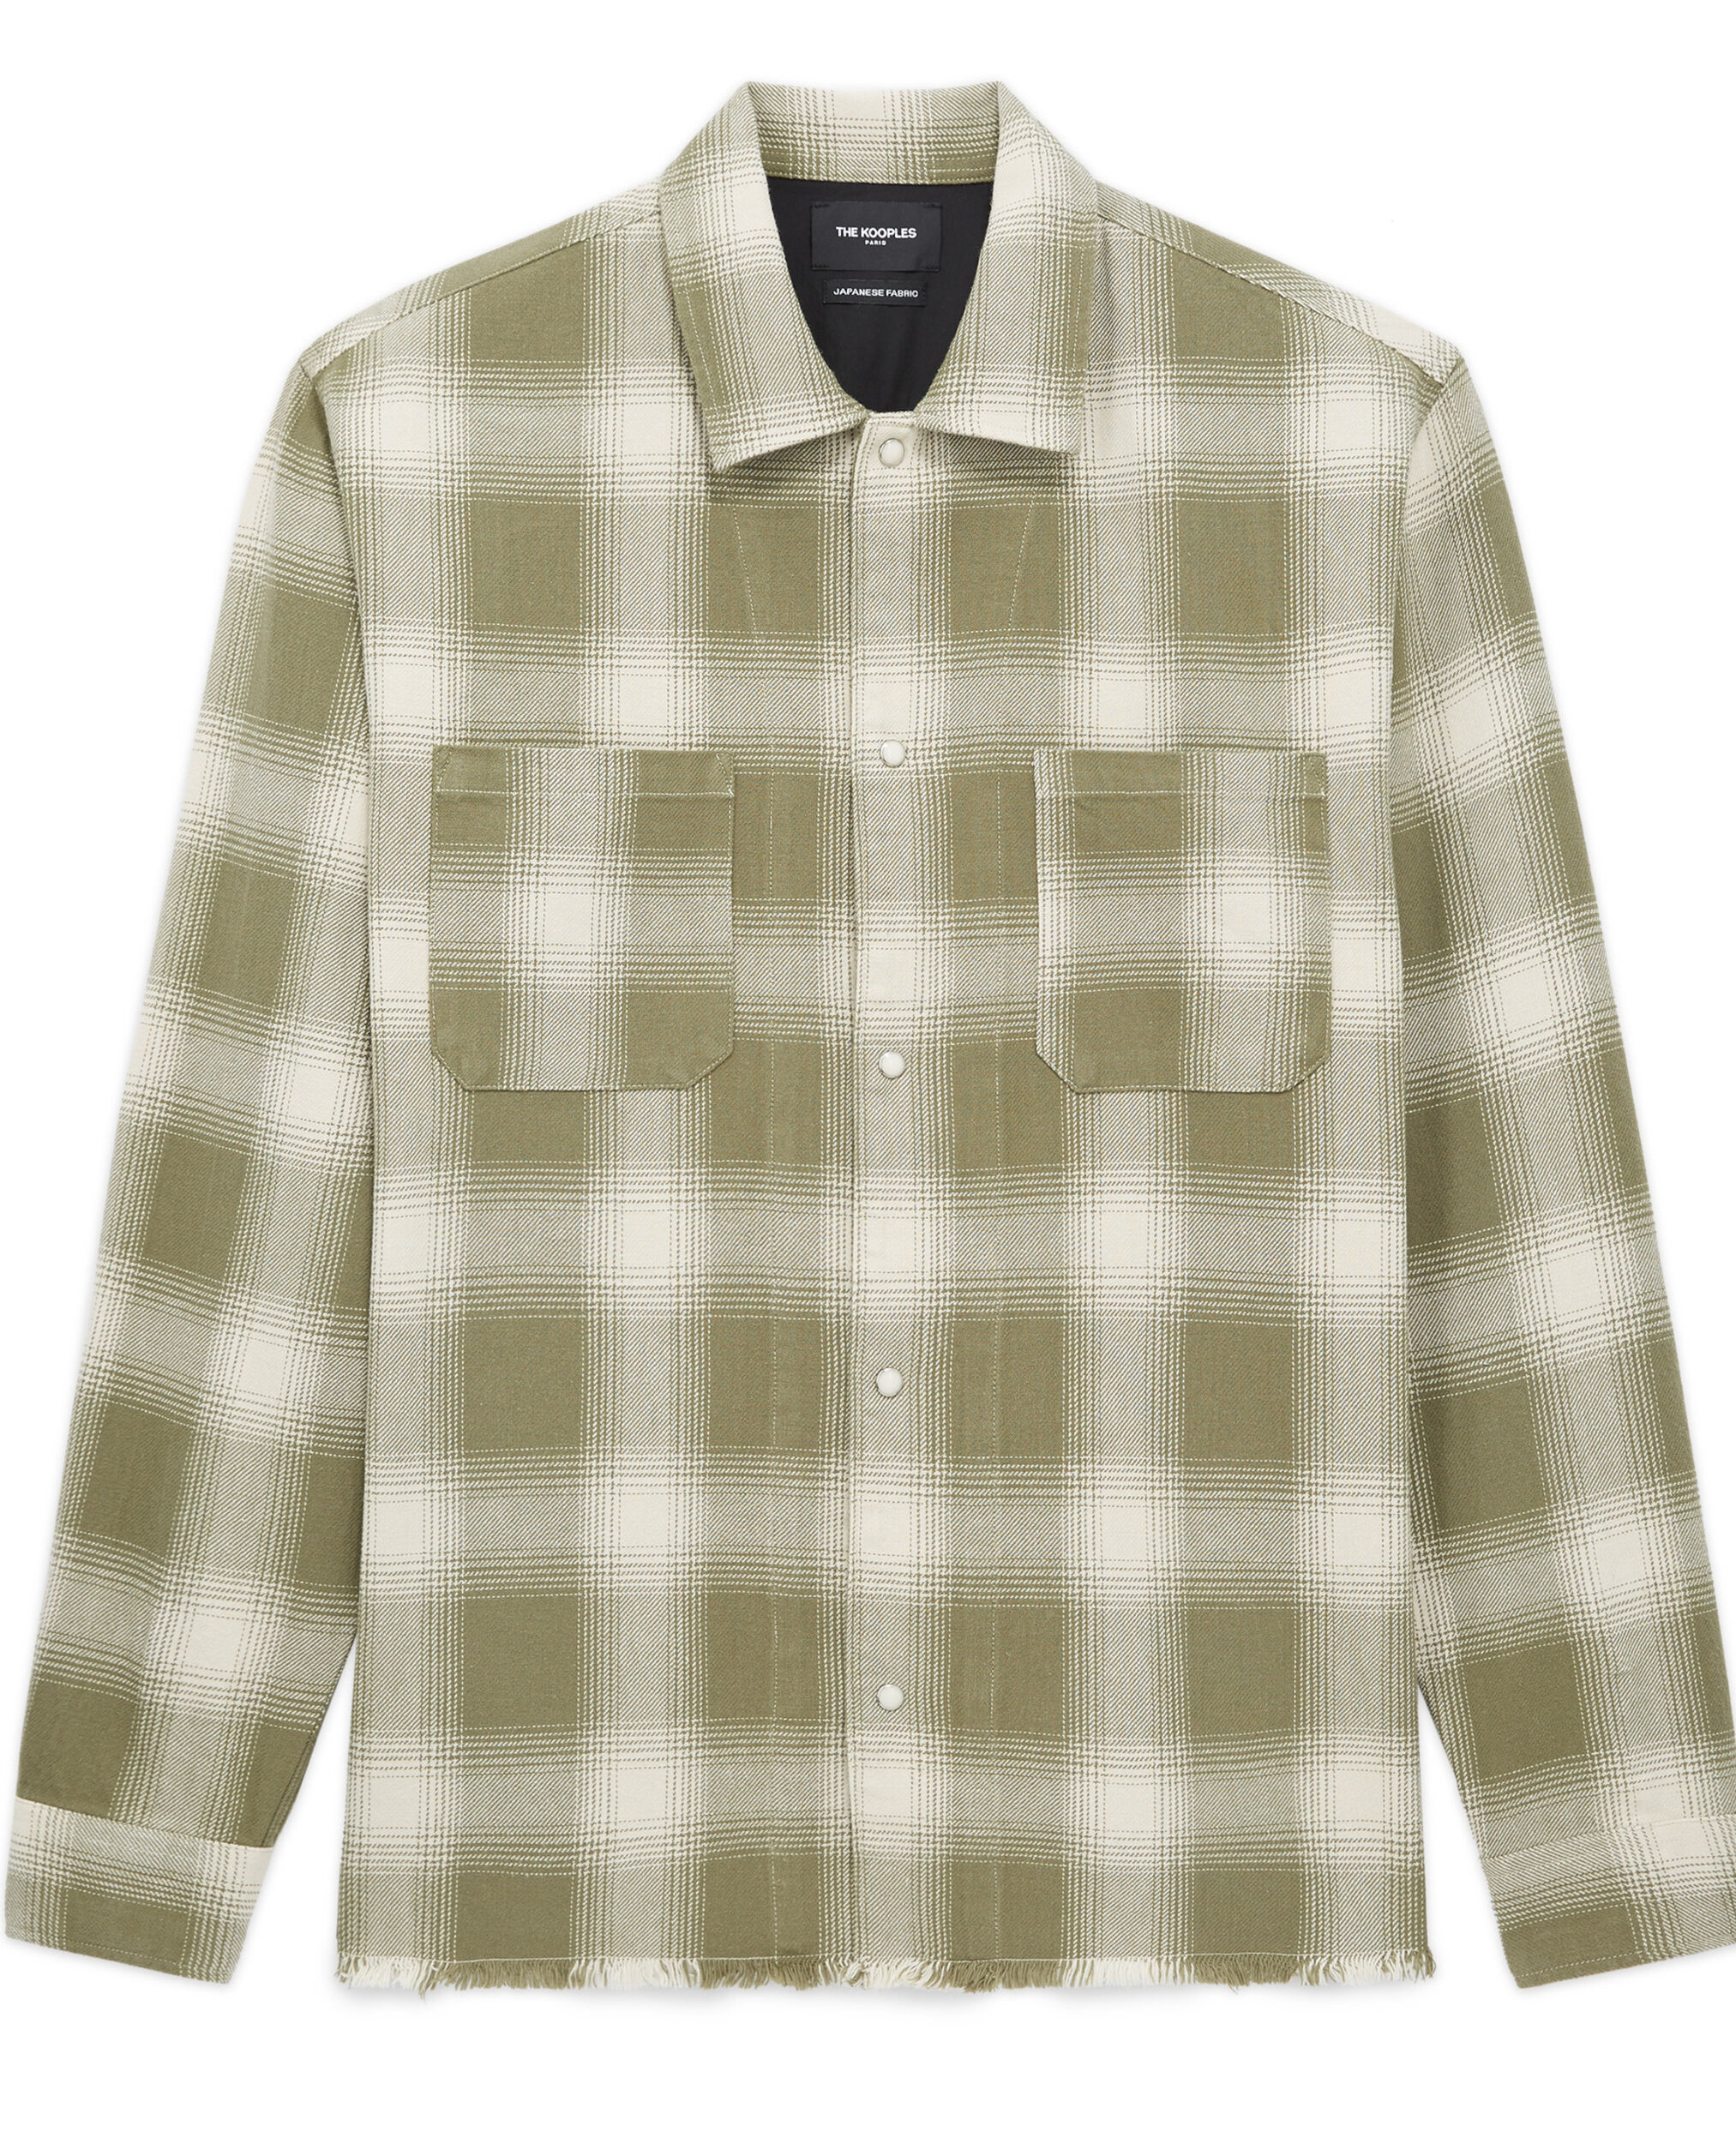 Men’s khaki and ecru check shirt, ECRU / KAKI, hi-res image number null